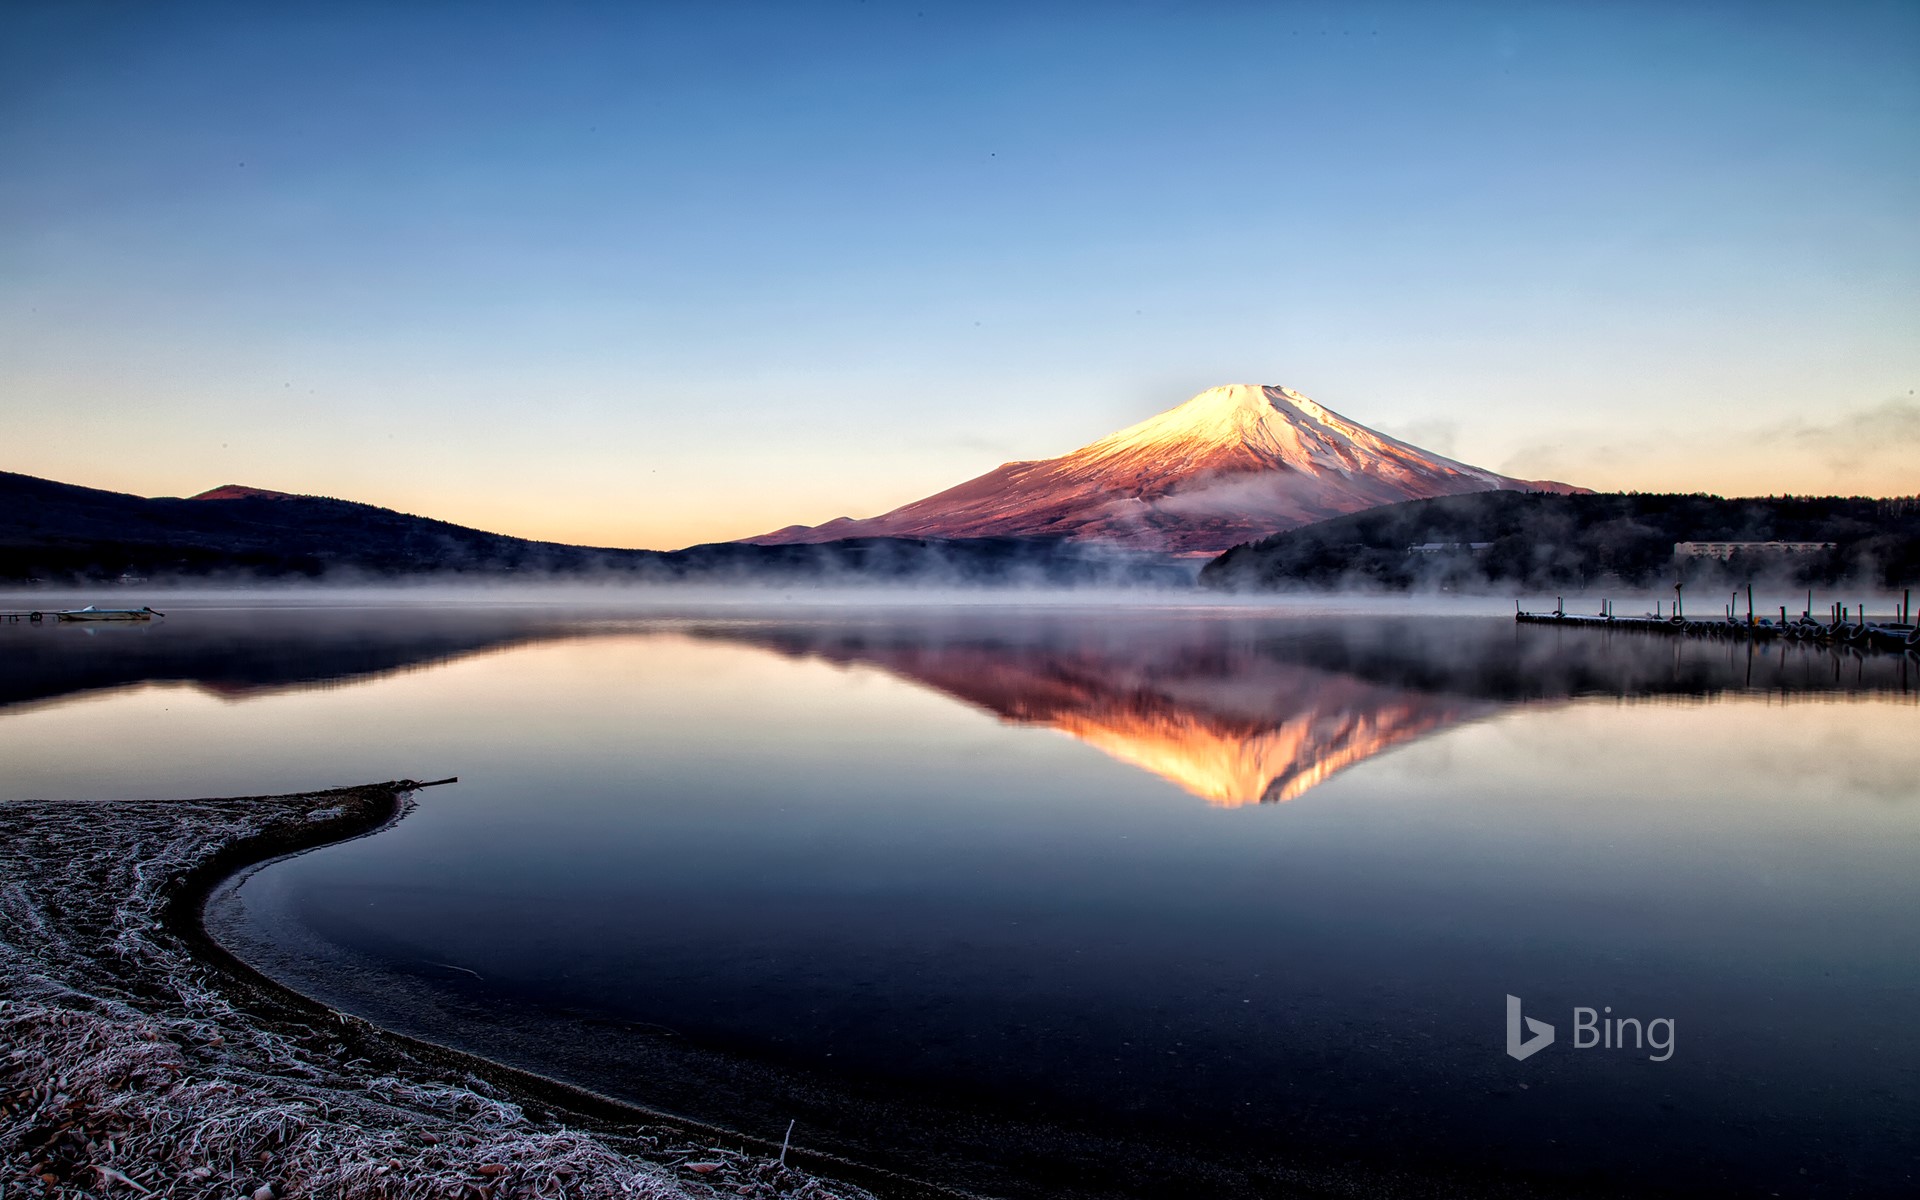 "Mt. Fuji seen from Lake Yamanaka", Yamanashi